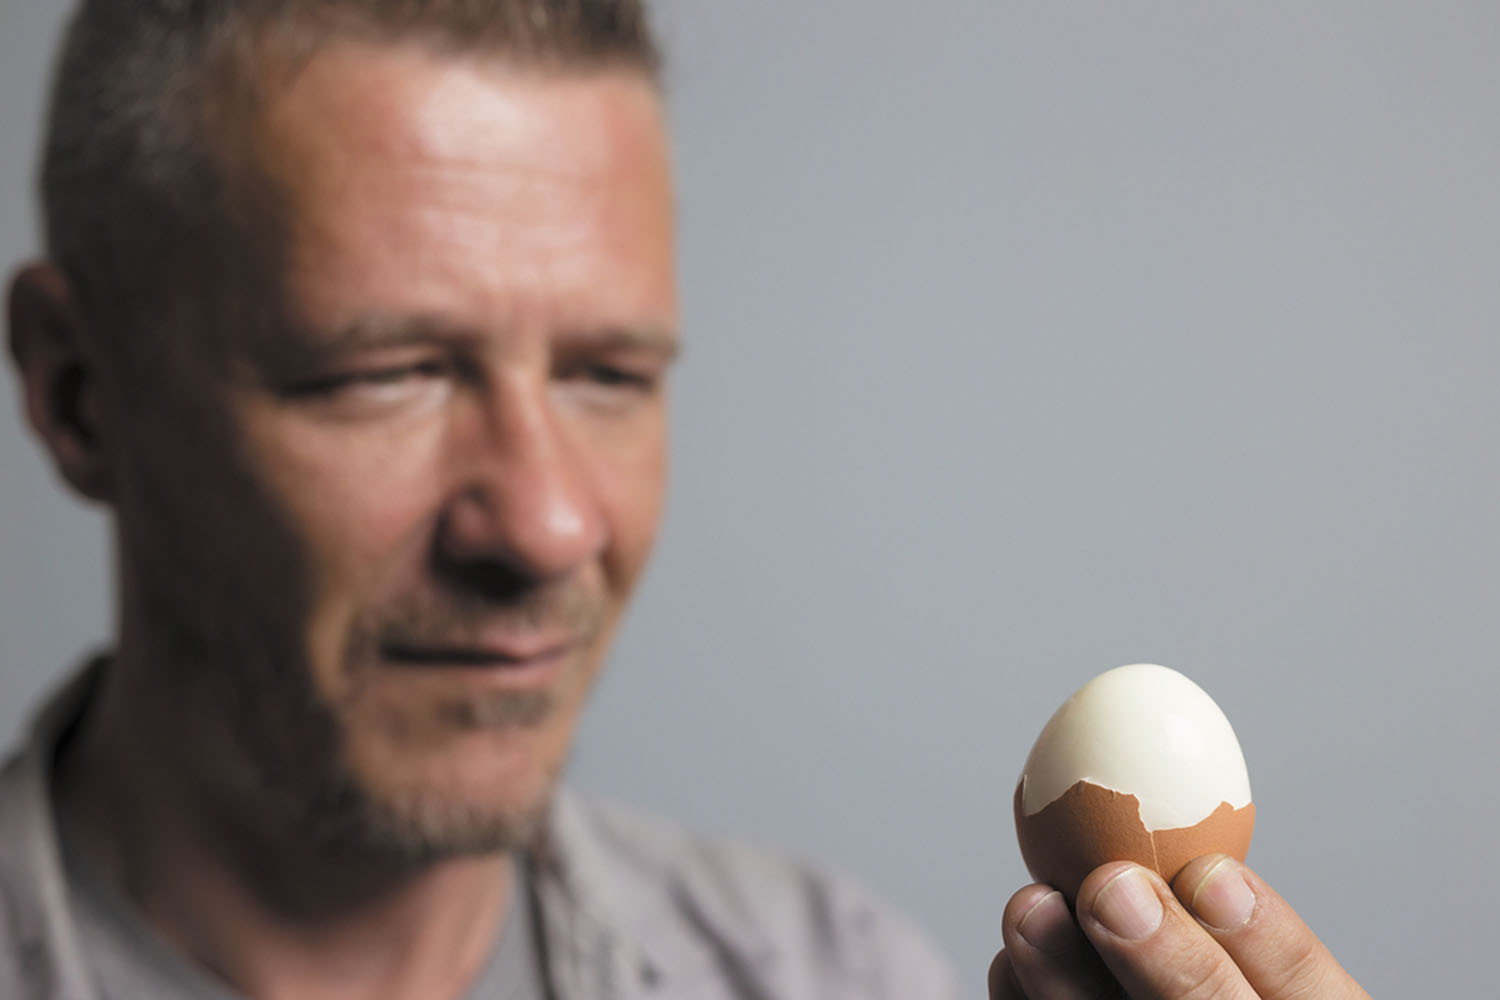 How many eggs can I safely eat? - Harvard Health